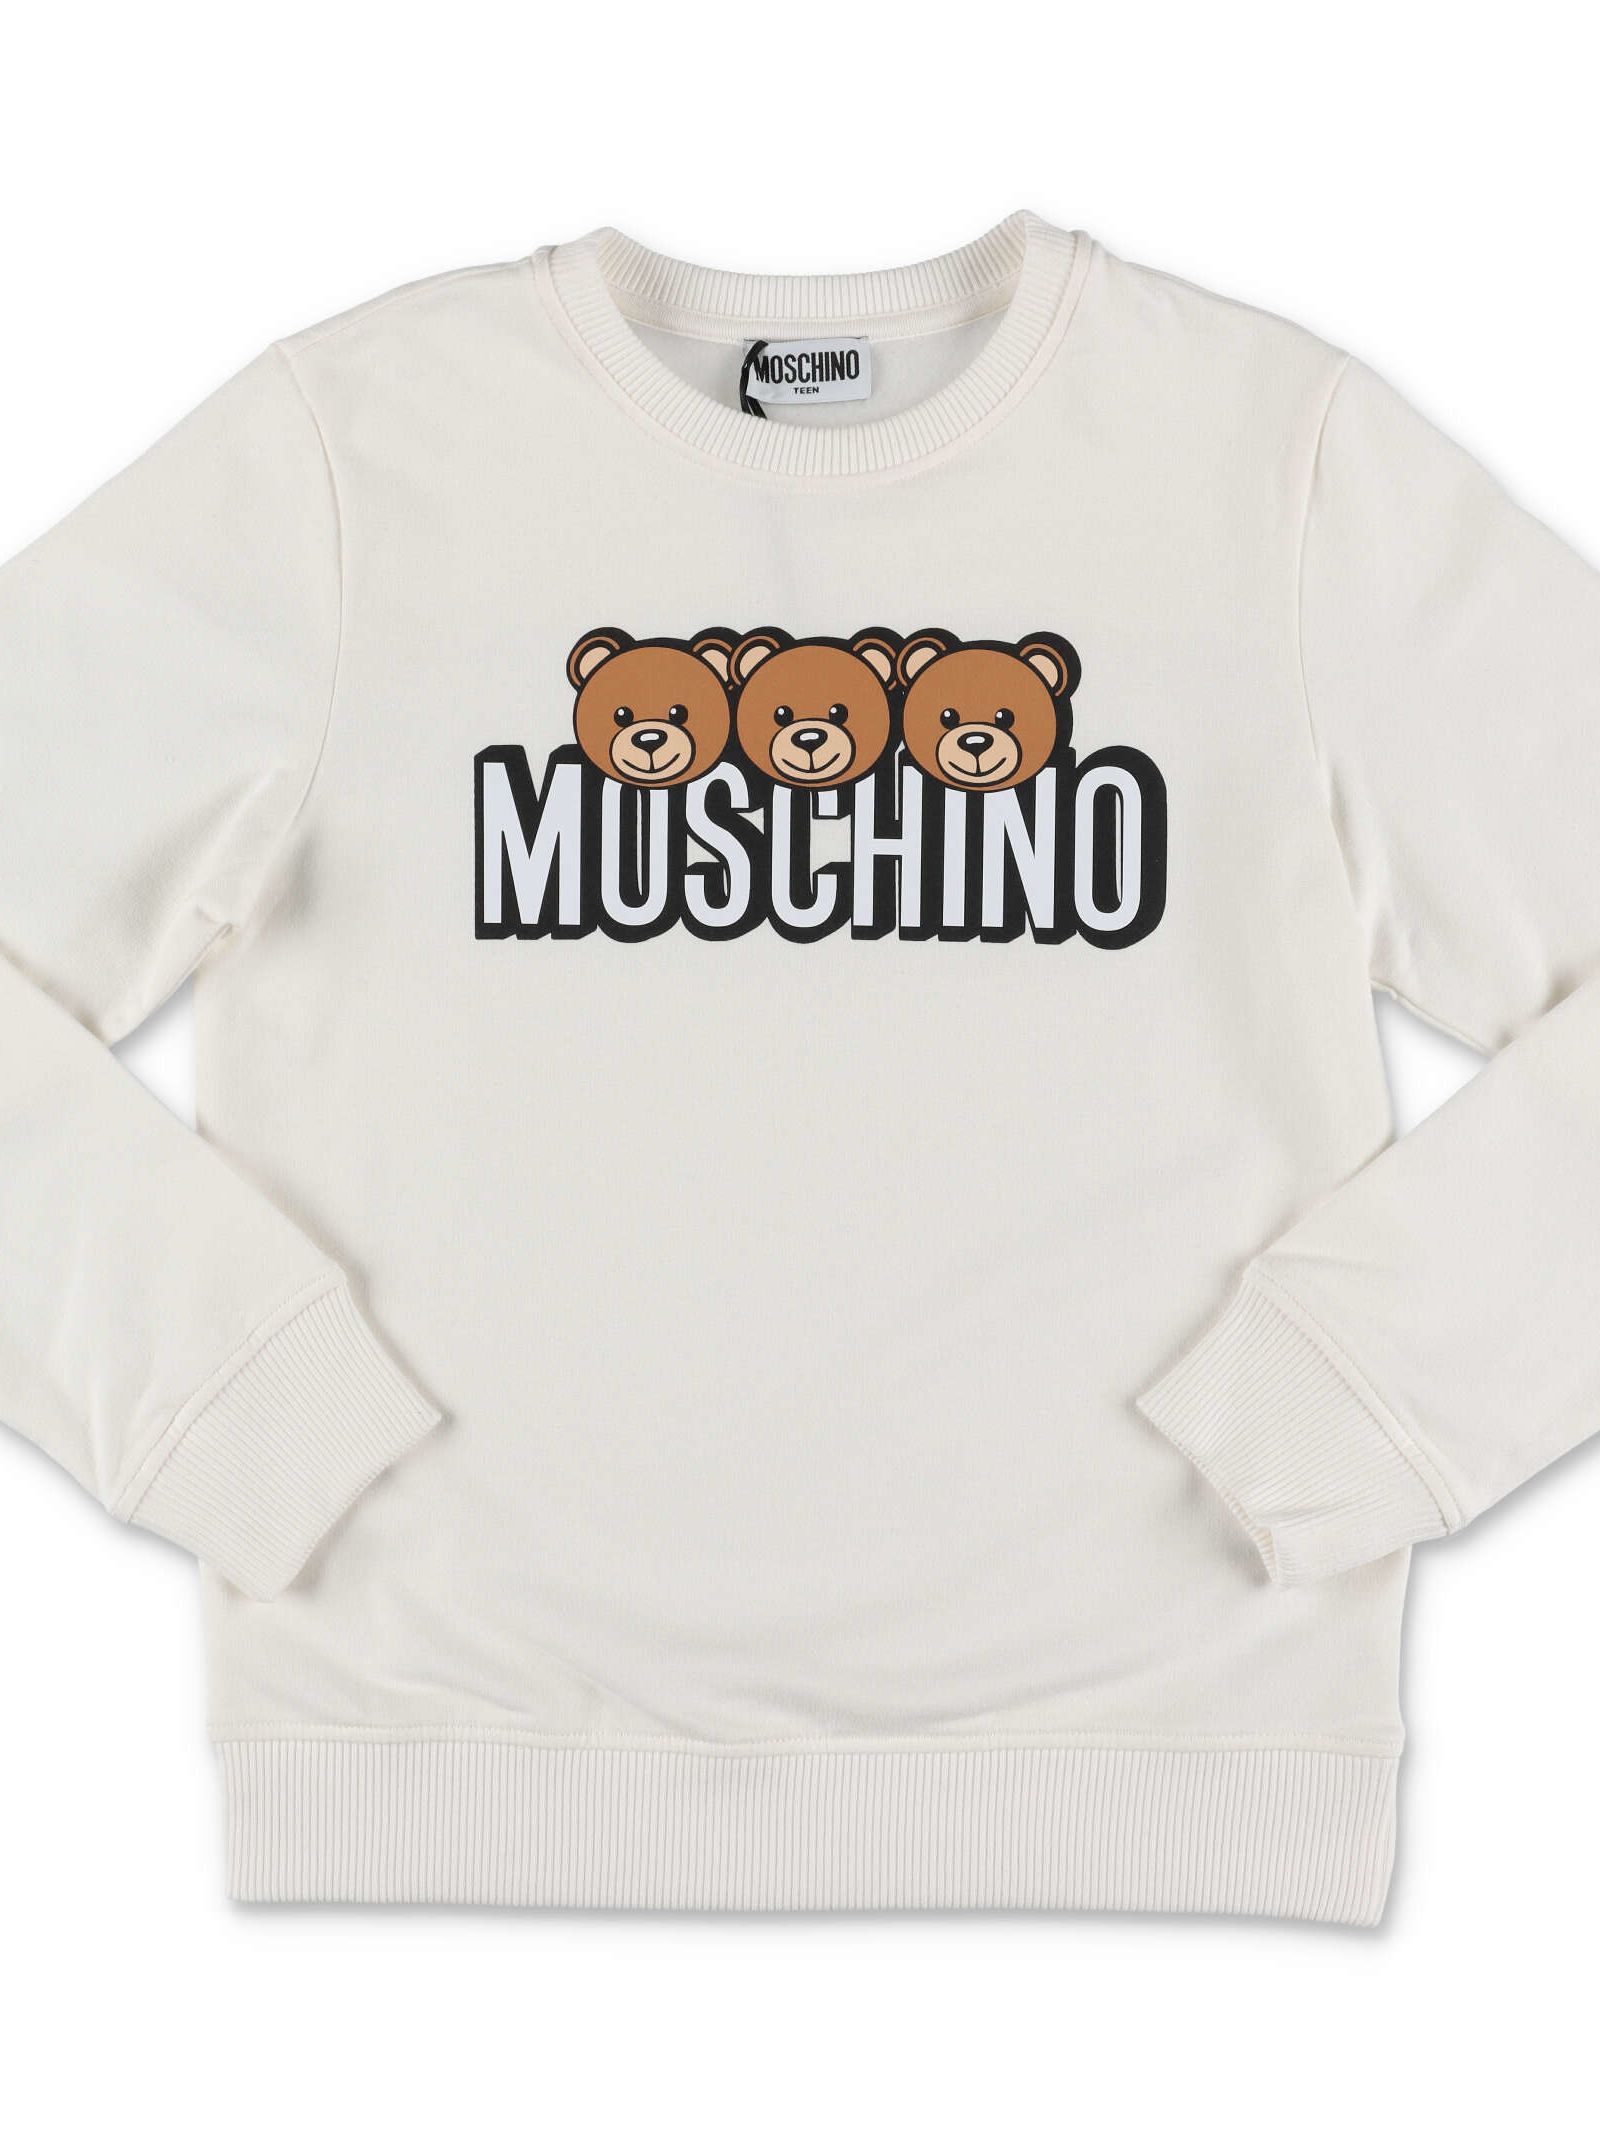 moschino sweater sale